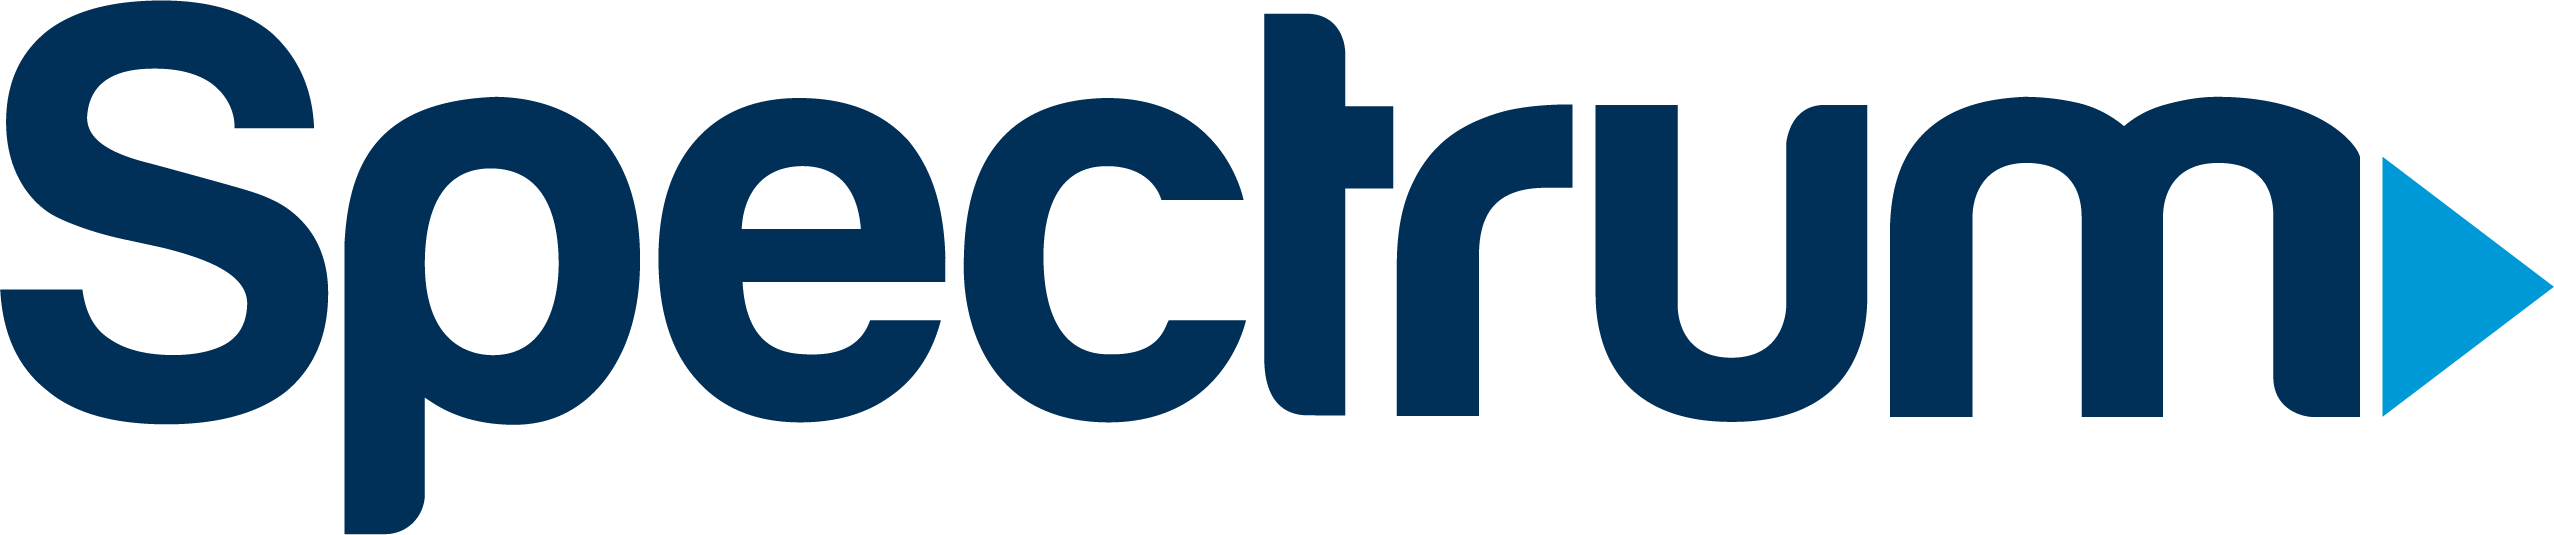 Spectrum internet logo